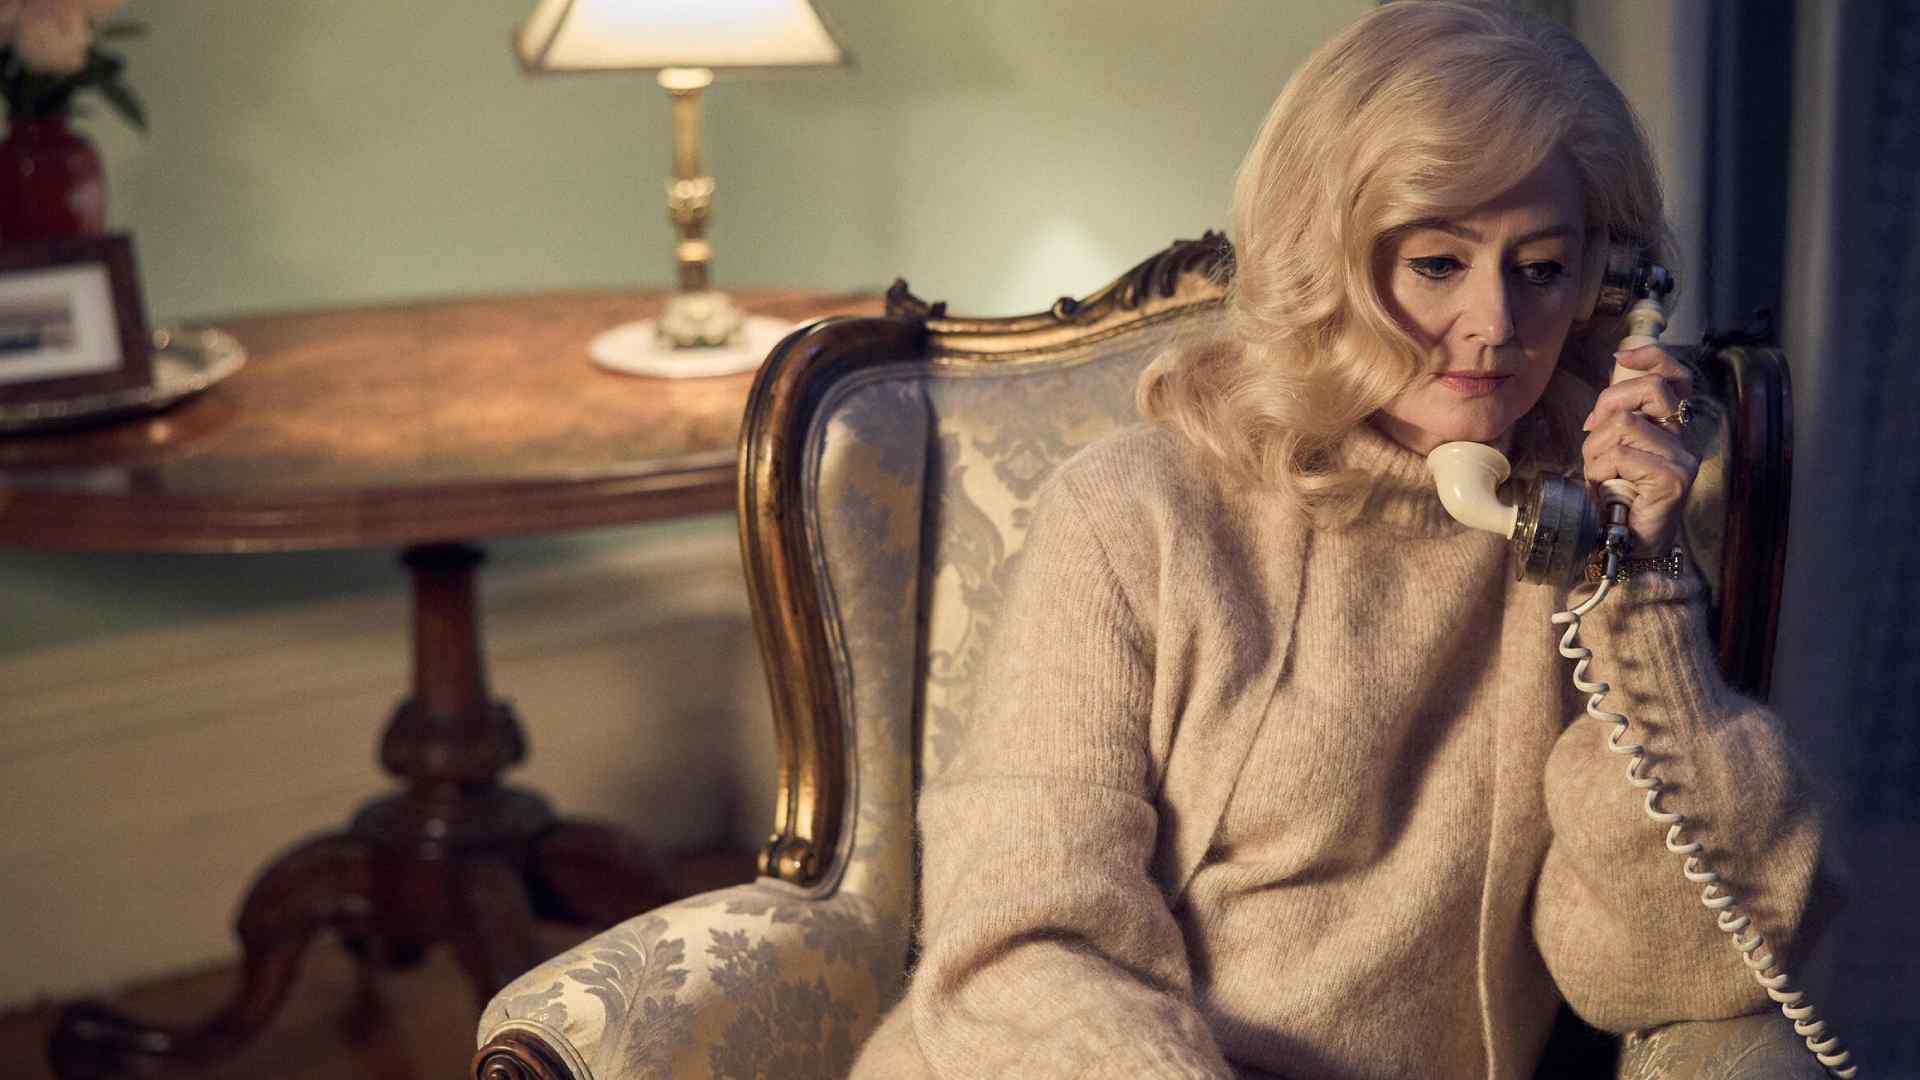 میراندا اتو در نقش آدرین/مادر در سریال The Clearing